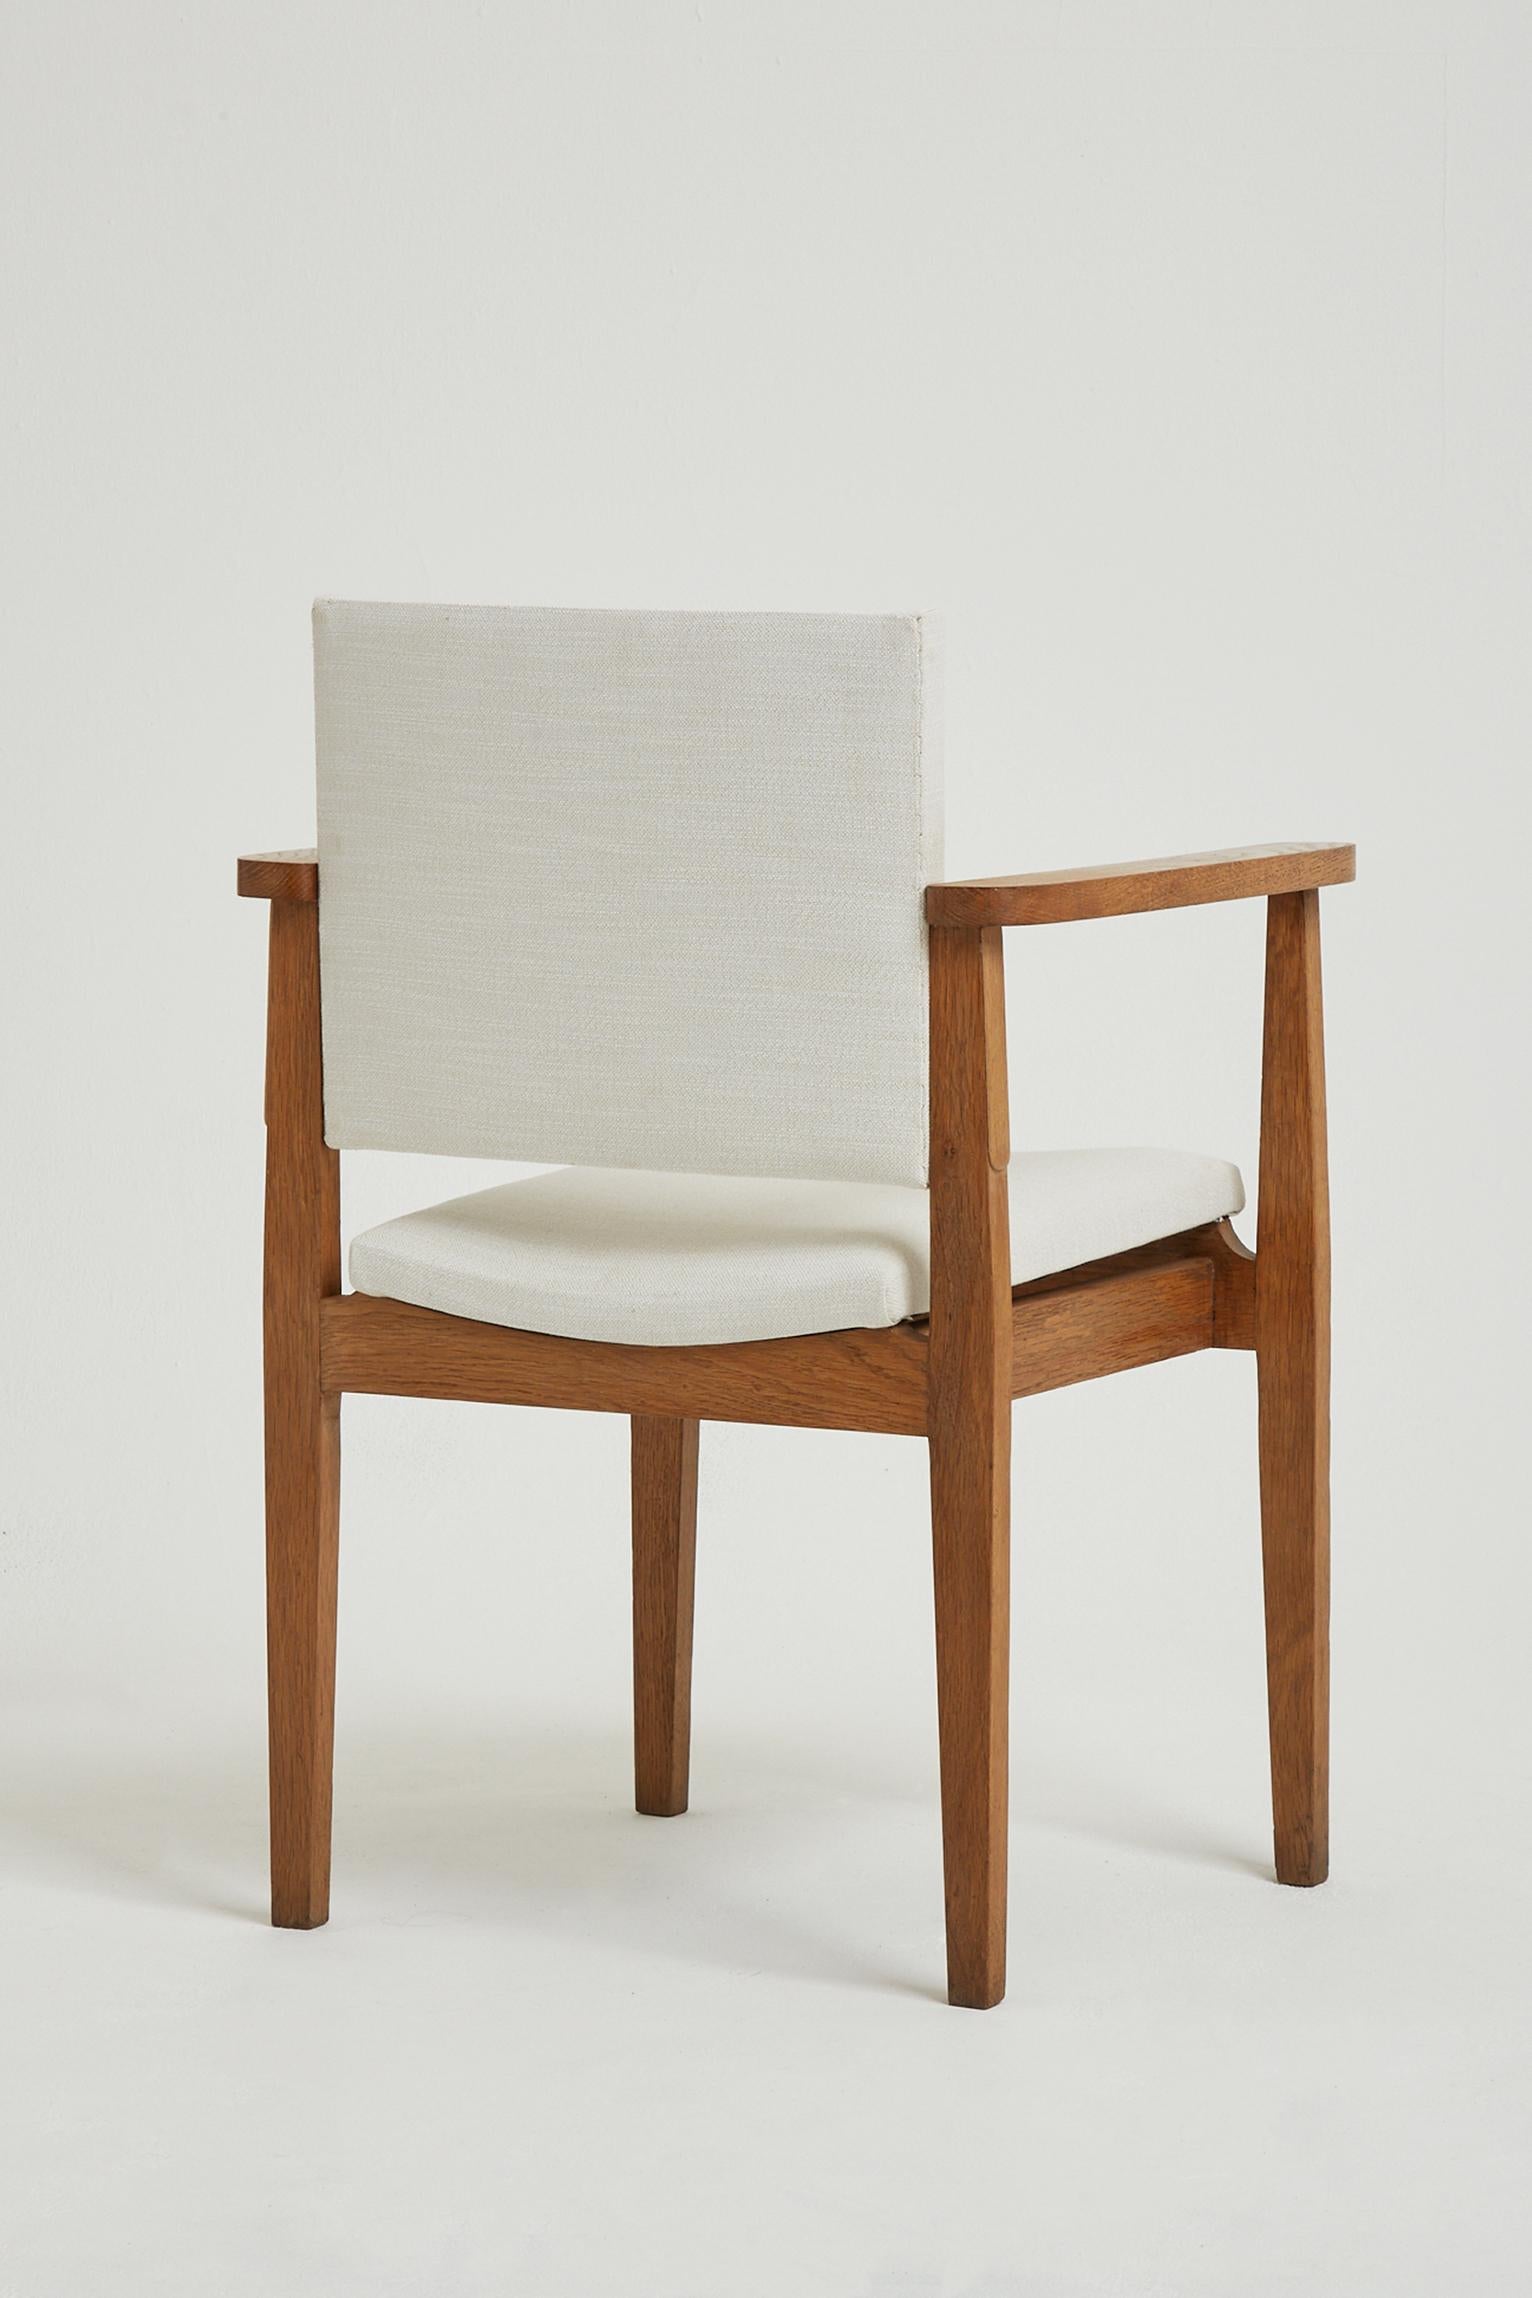 Sessel aus Eichenholz im Art déco-Stil (20. Jahrhundert)